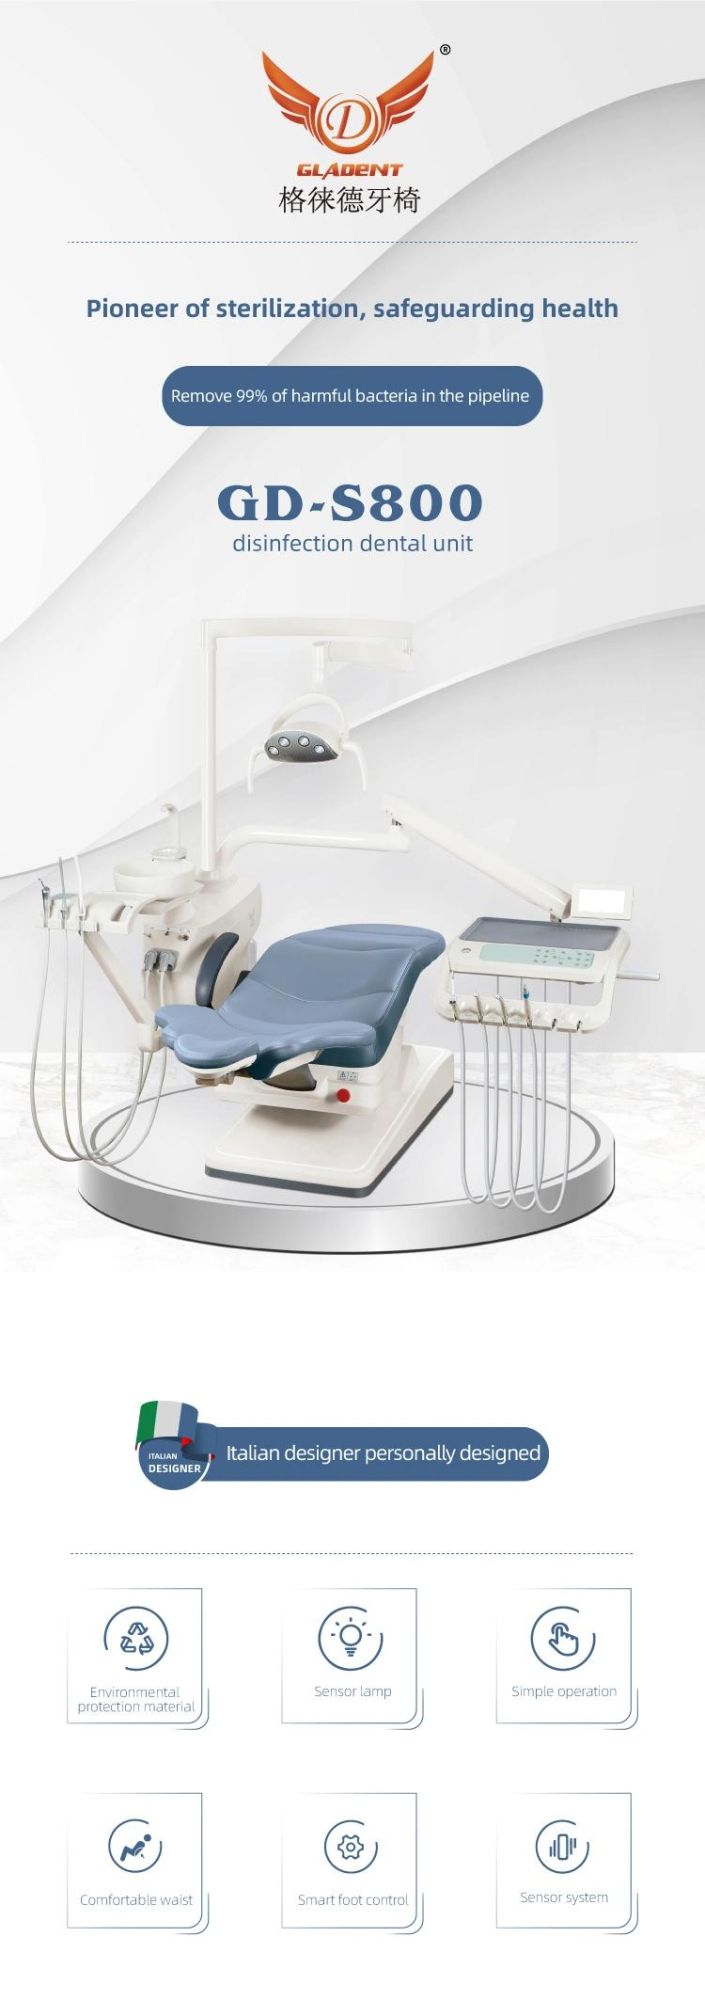 Dental Chair Unit Portabl with Micro Fiber Leather Cushion